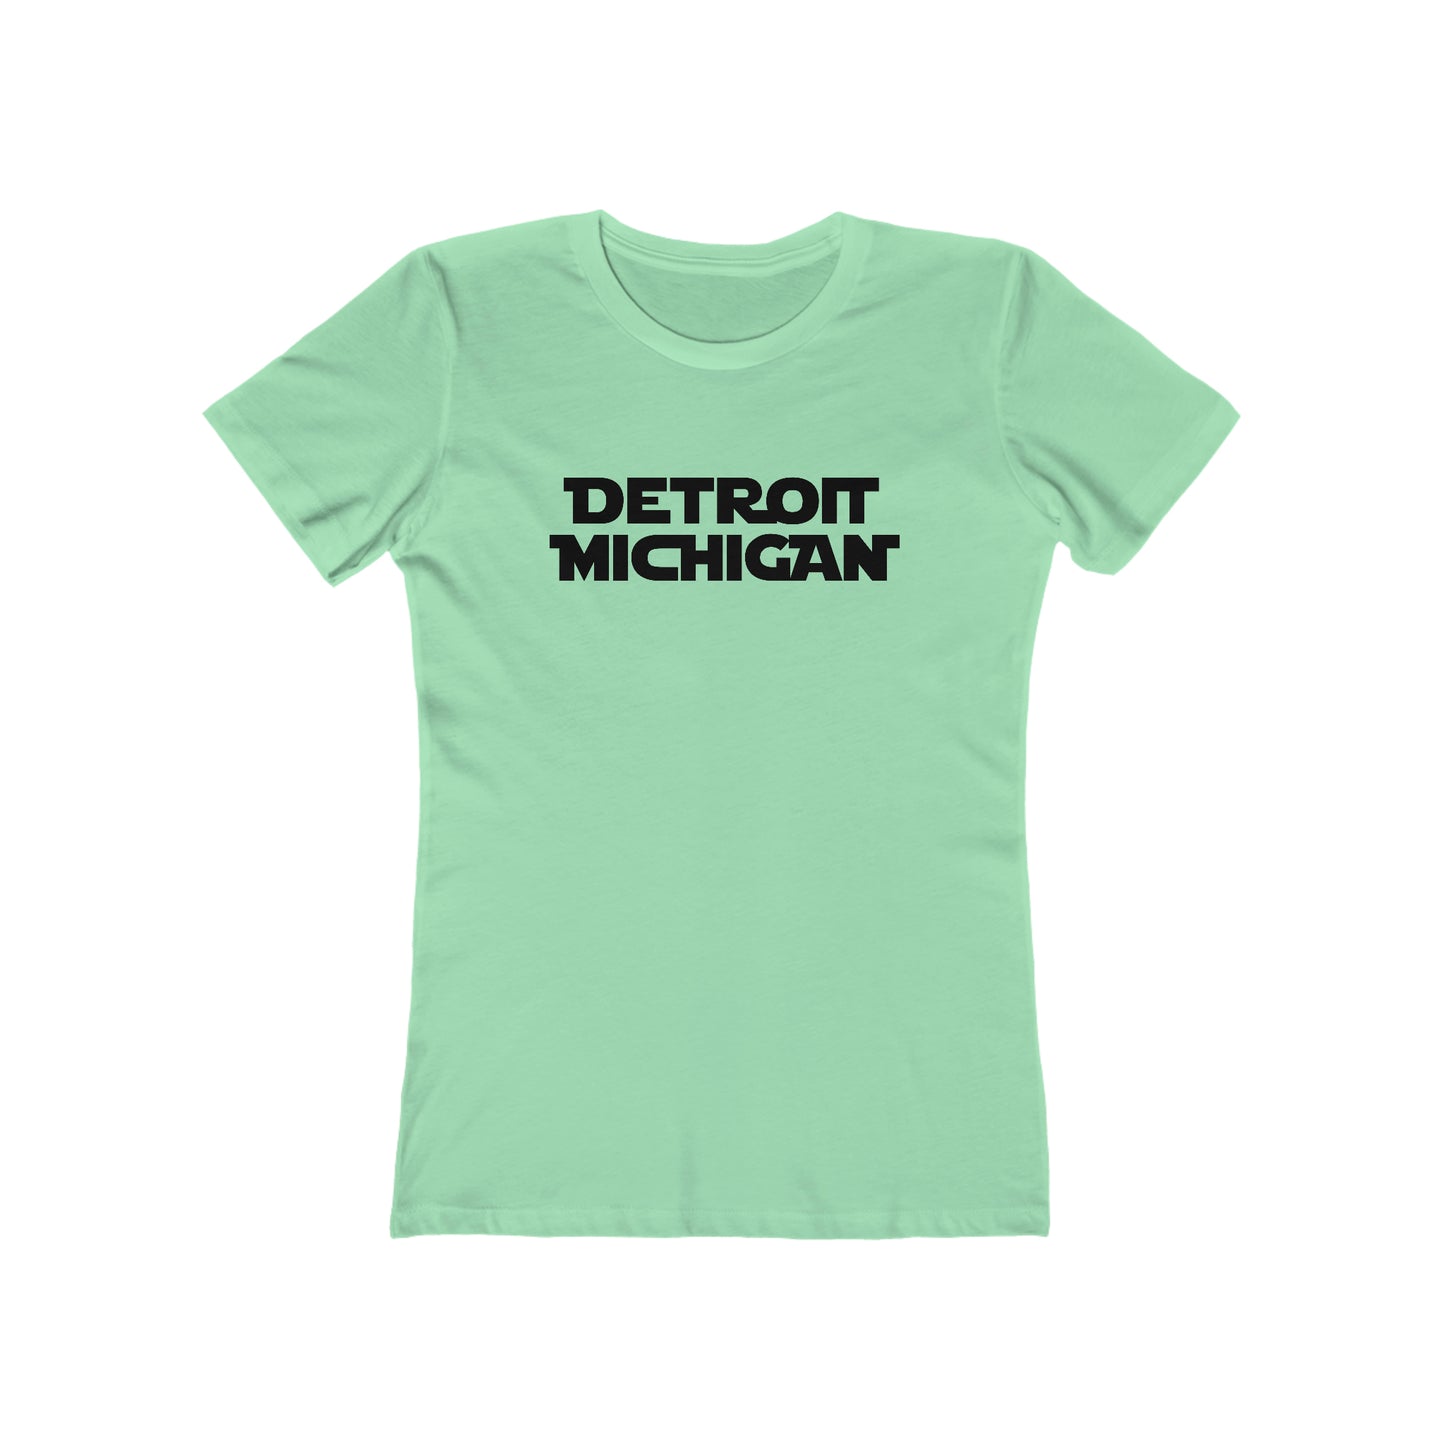 'Detroit Michigan'T-Shirt (1970s Epic Sci-Fi Parody) | Women's Boyfriend Cut